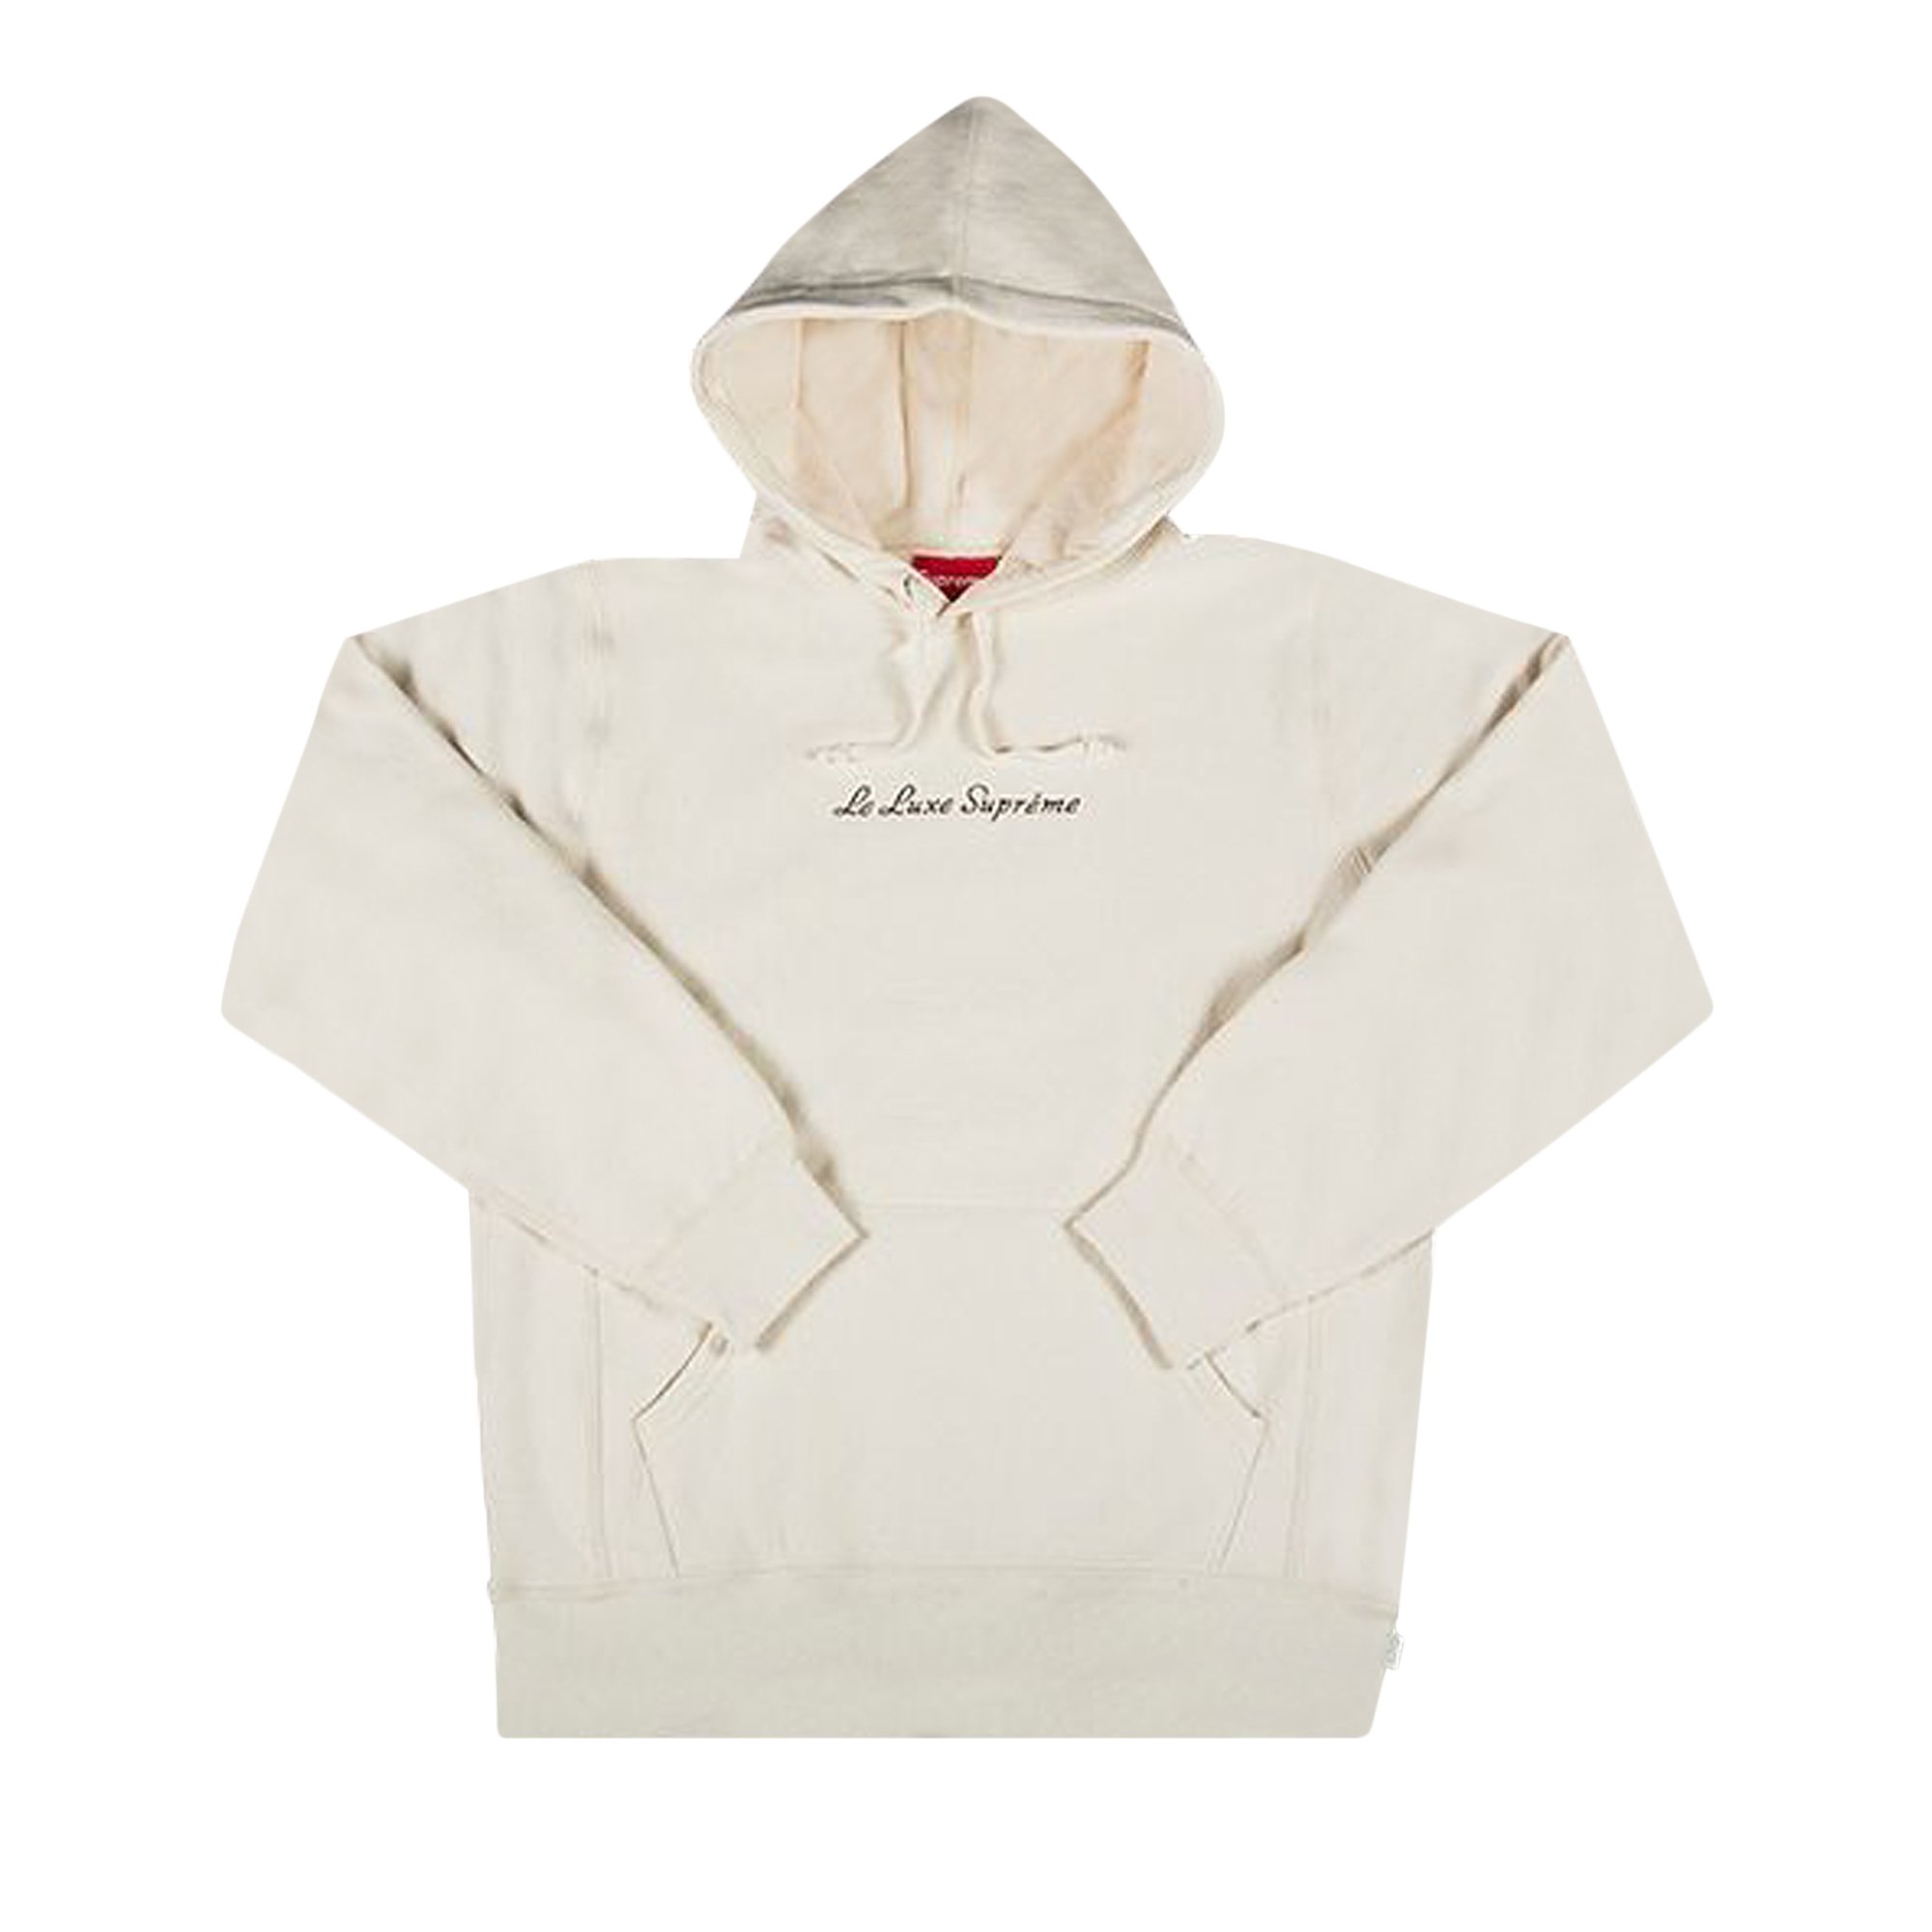 【XL】Le Luxe Hooded Sweatshirt